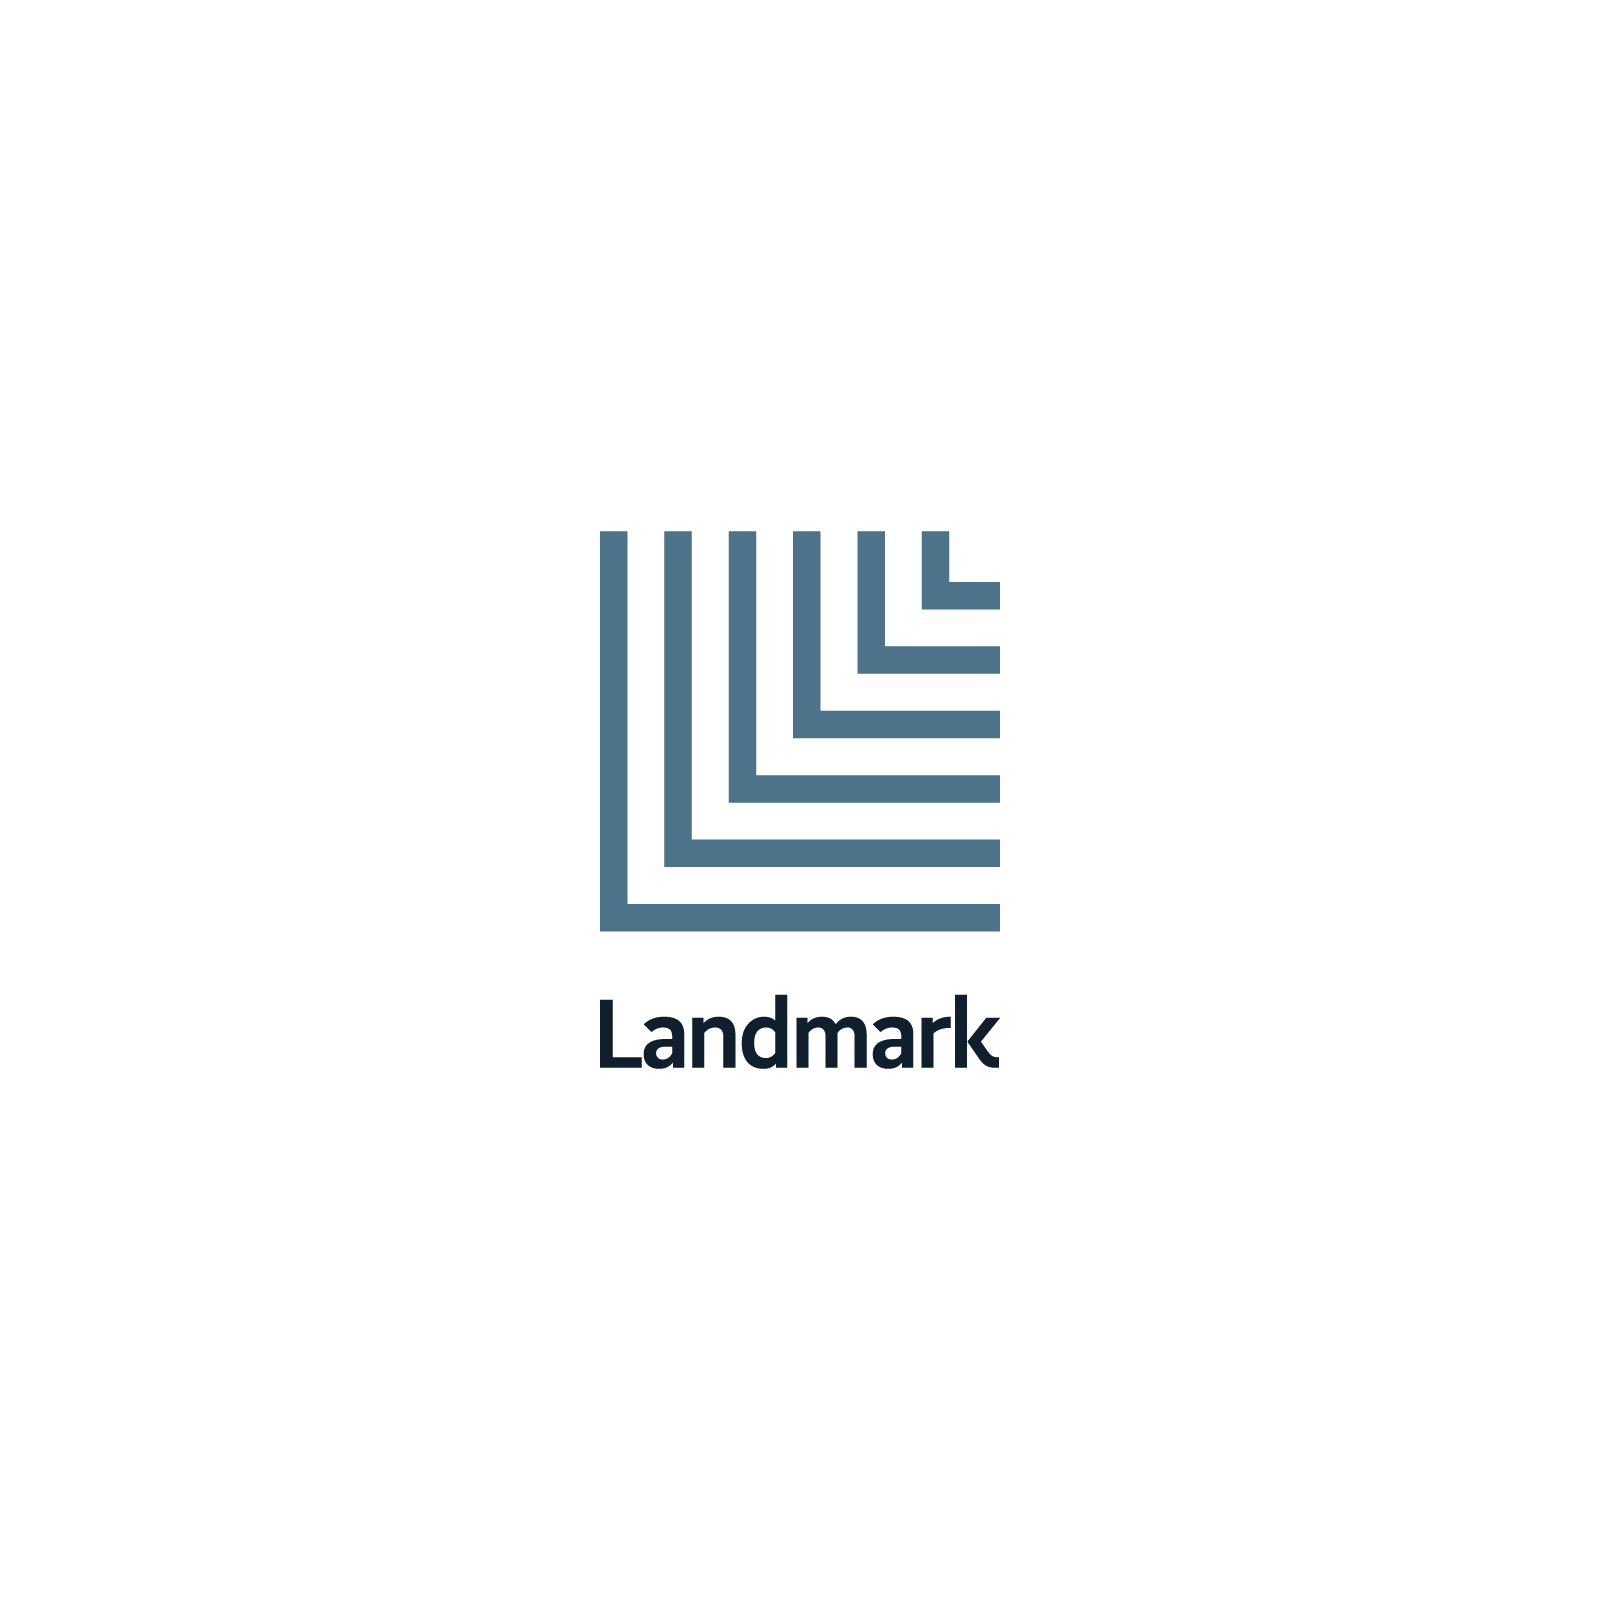 Landmark - Branding - Logotype - Peek Creative Ltd Colour way 1 - Square - Portfolio